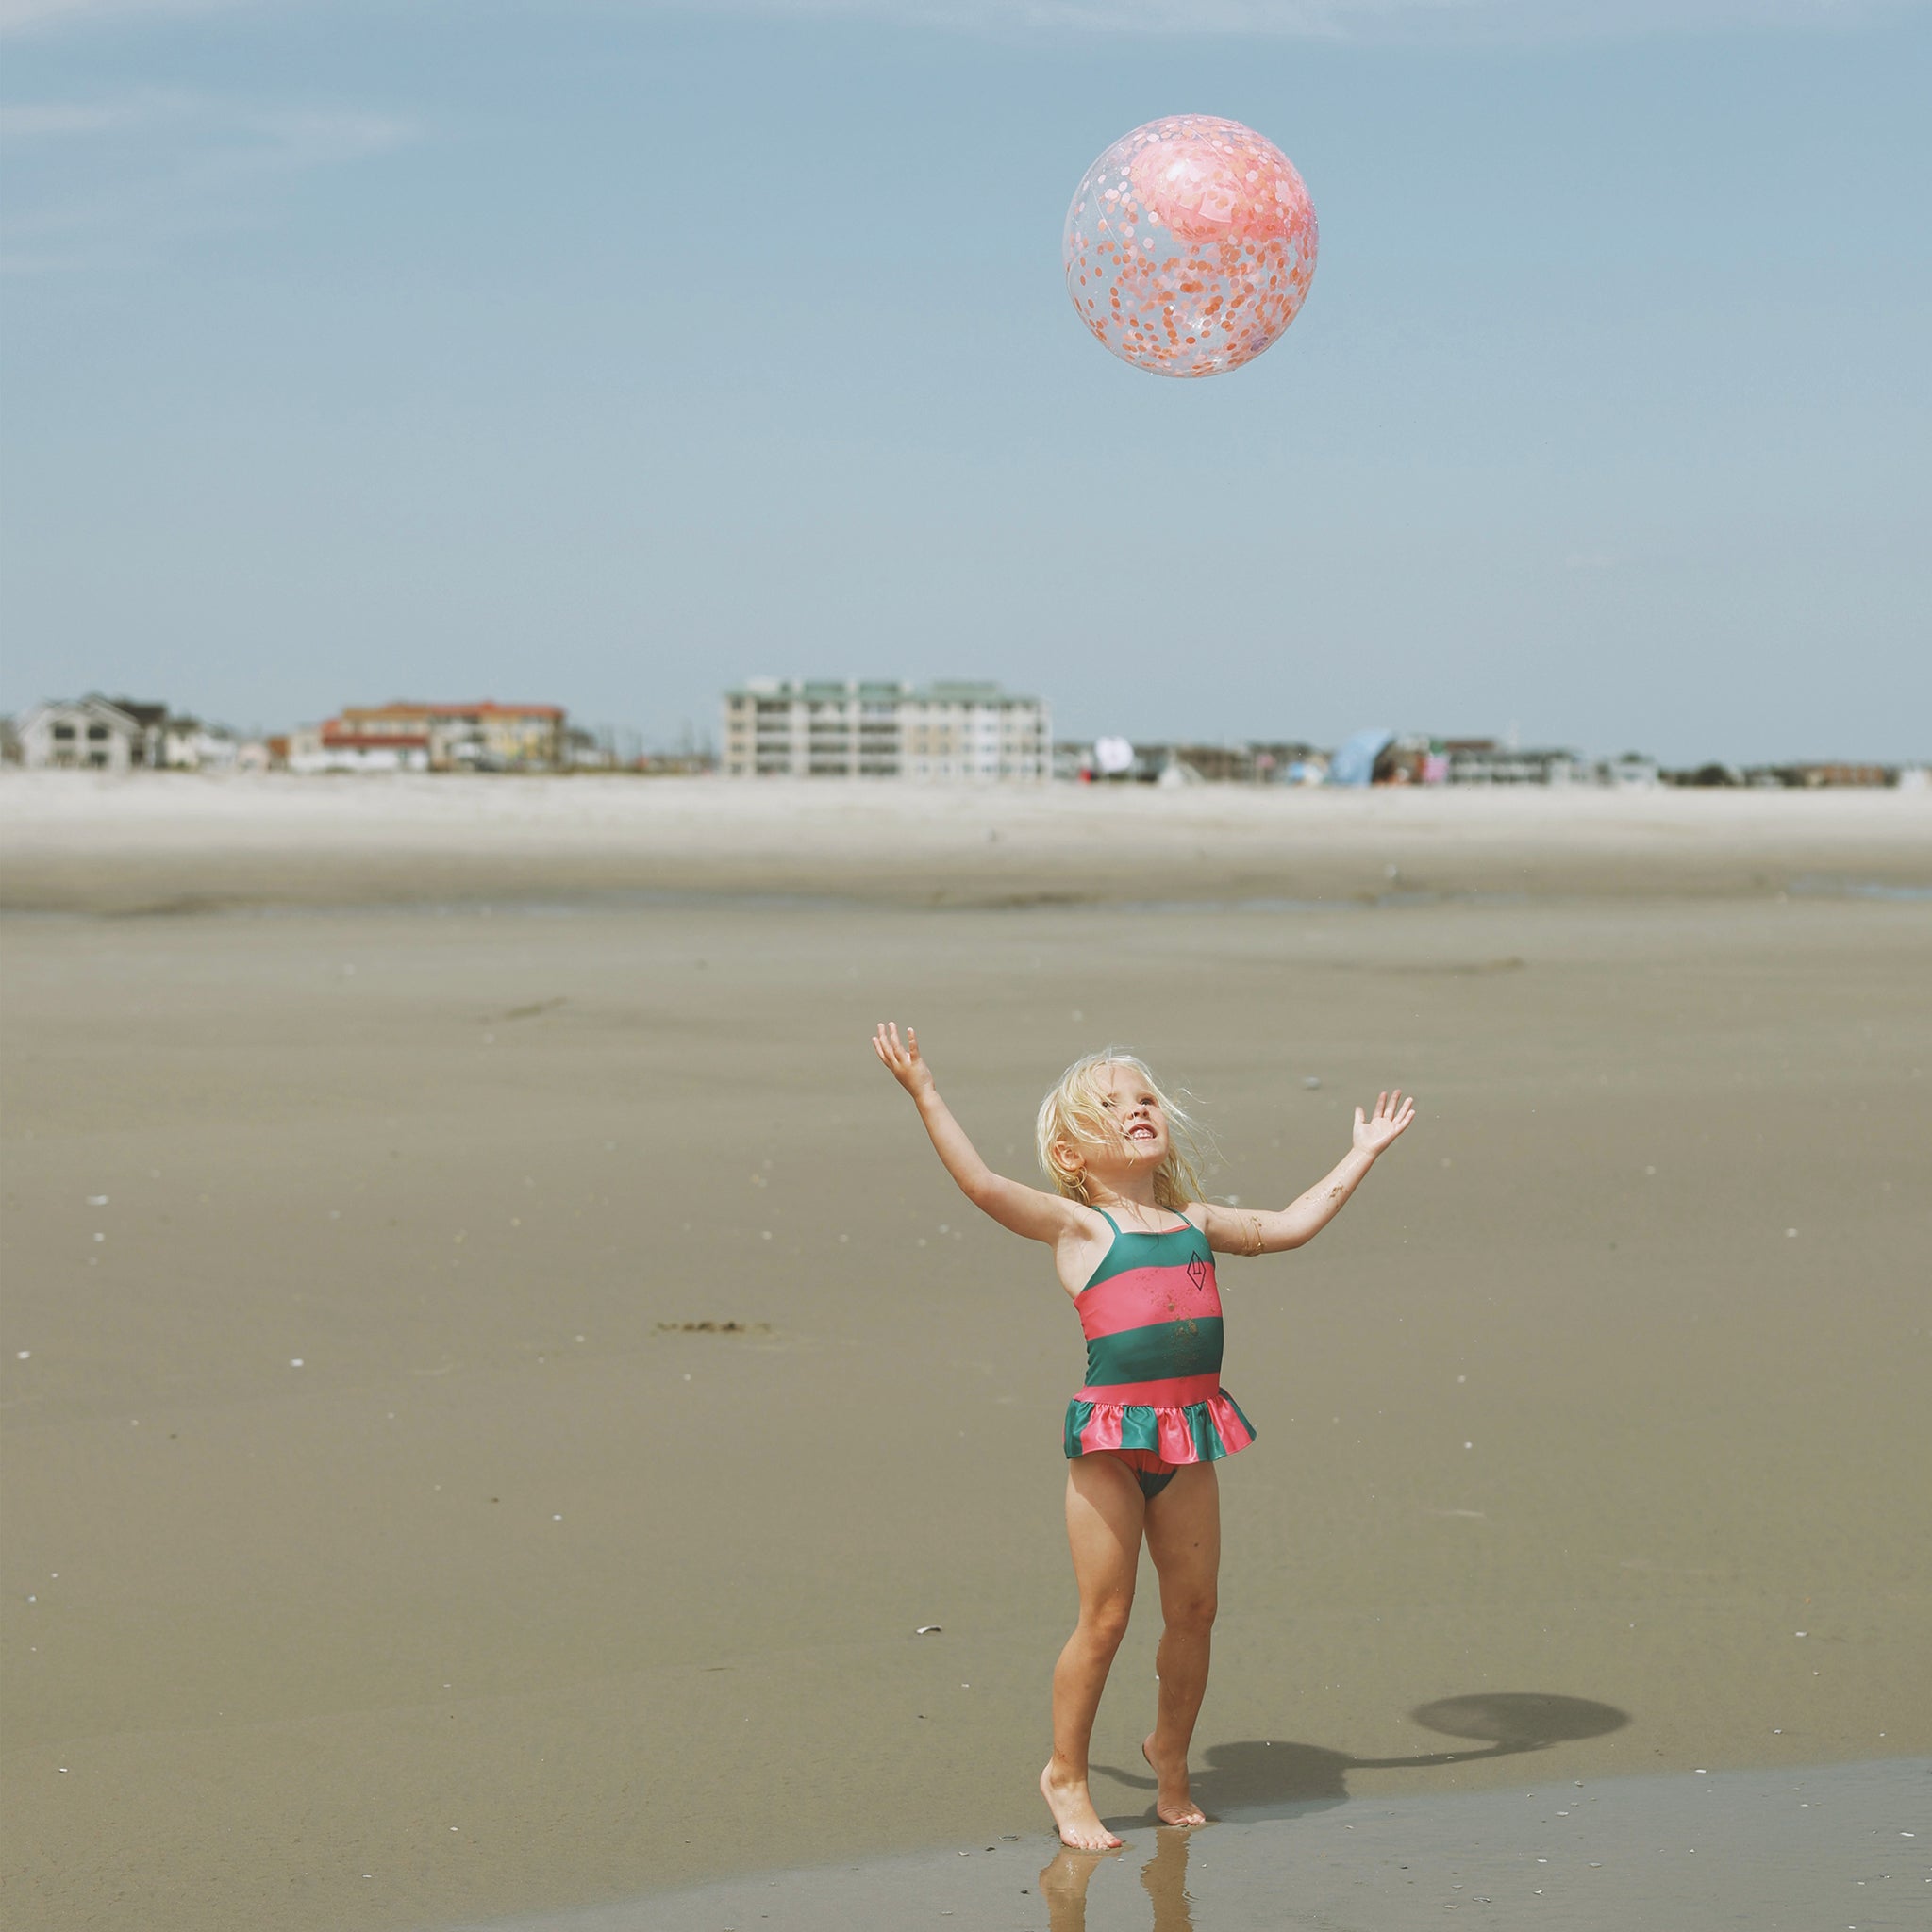 Le ballon de plage gonflable sorbet, Sunnylife